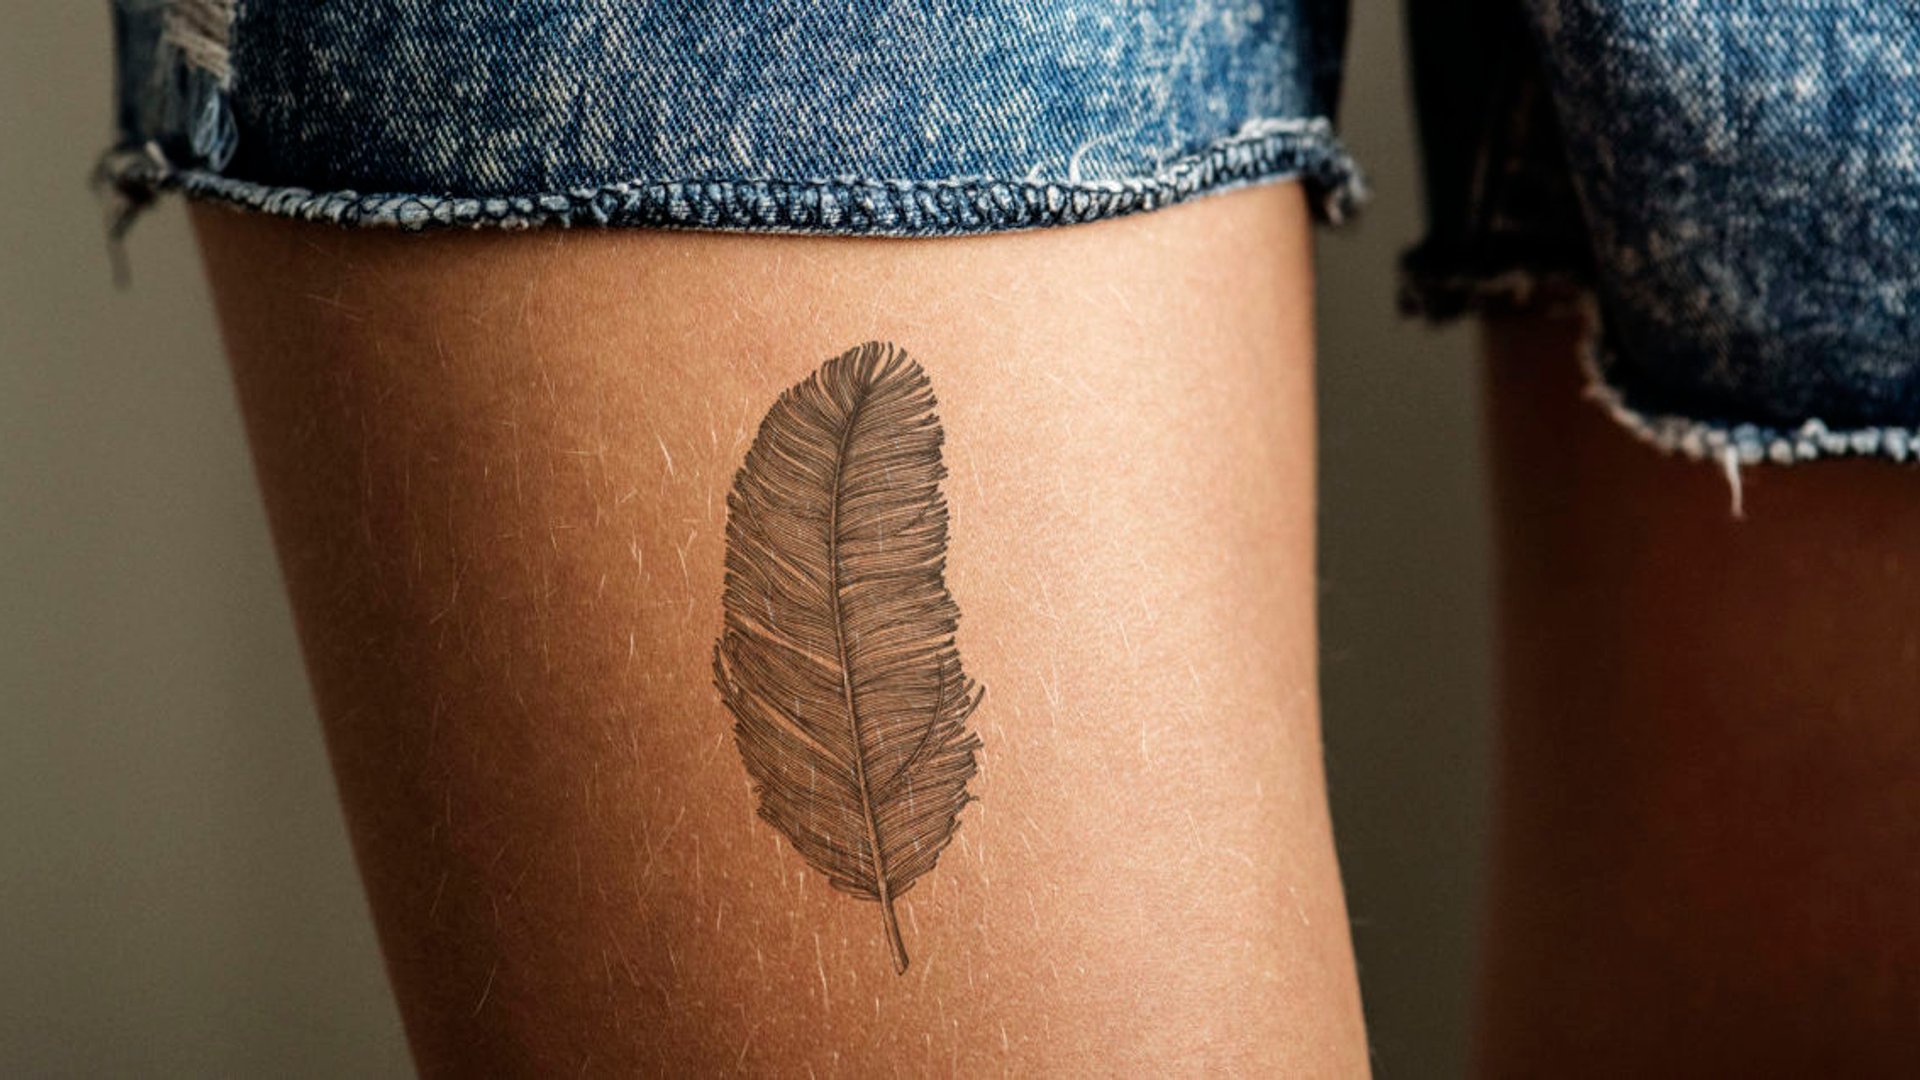 Tattoo bedeutung freiheit